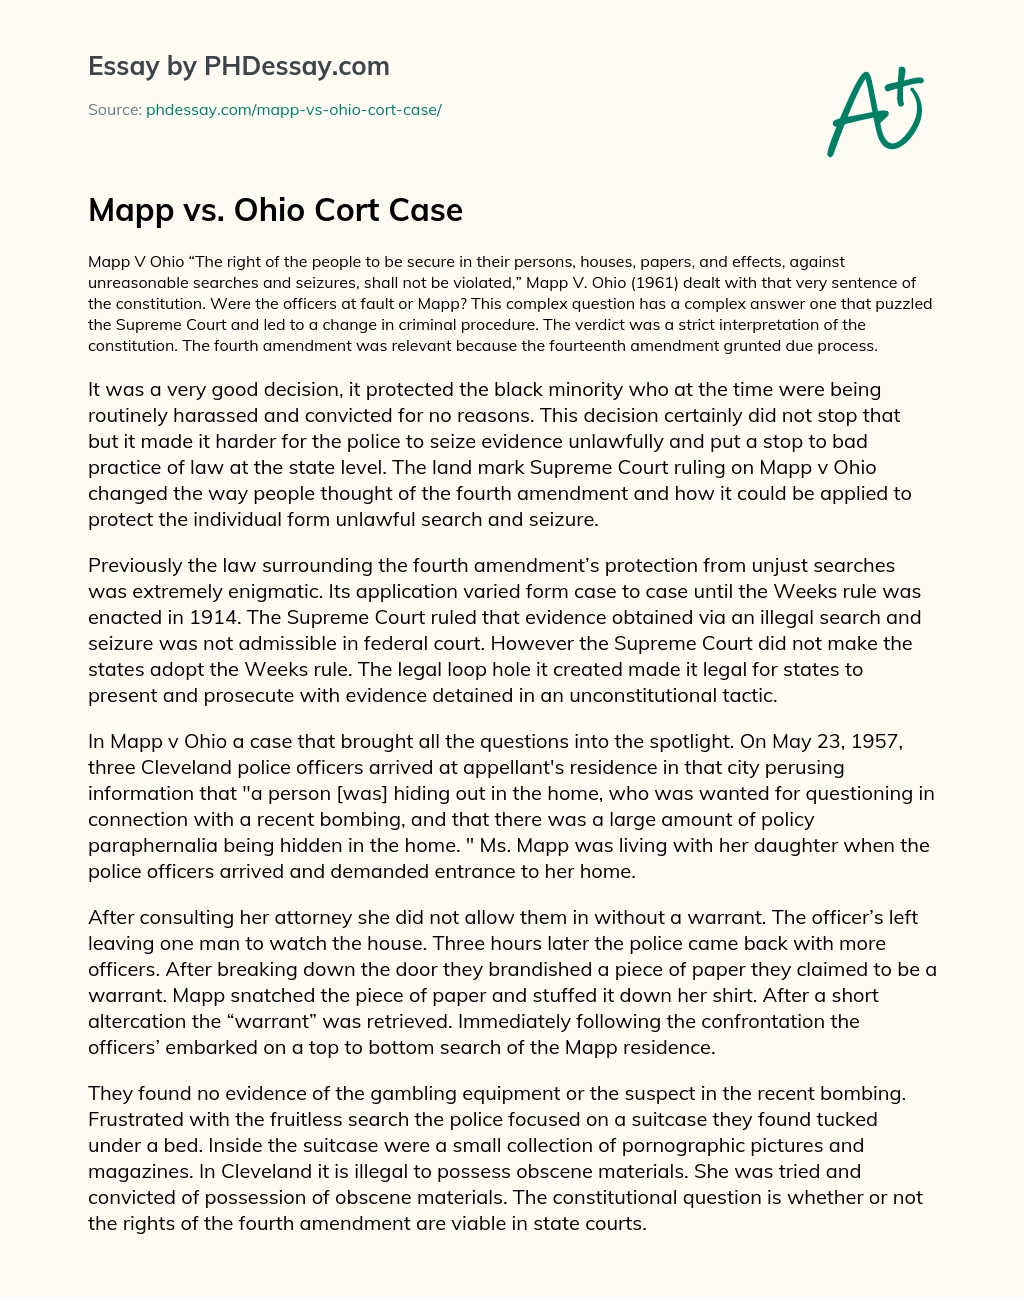 Mapp vs. Ohio Cort Case essay